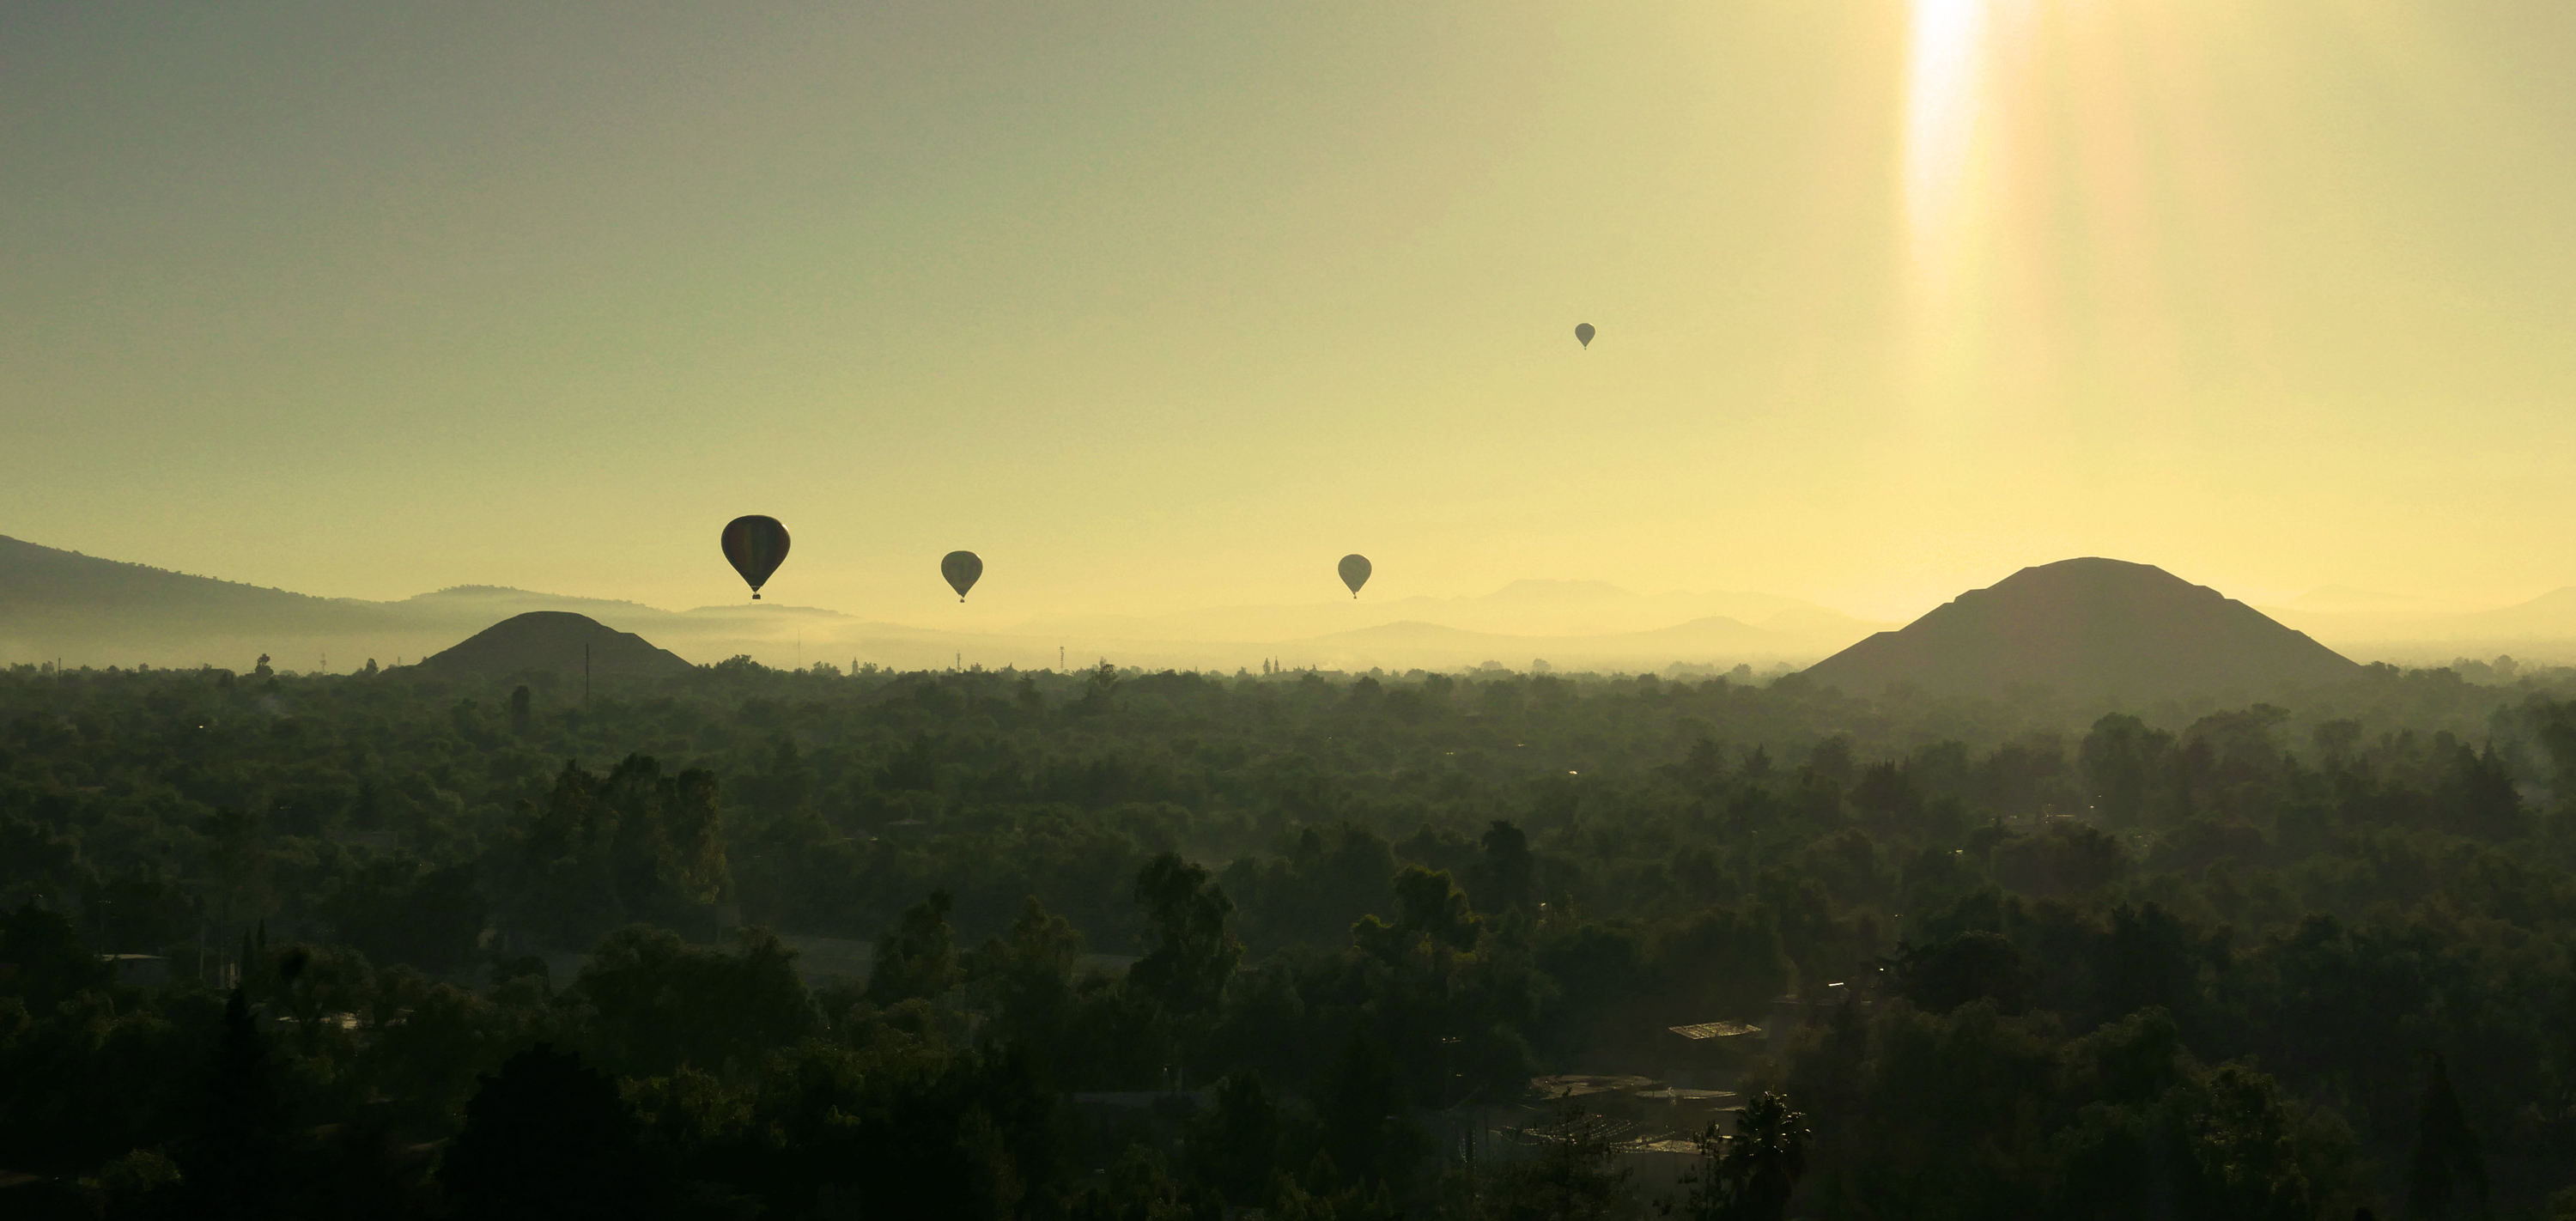 balloon over teotihuacan pyramids